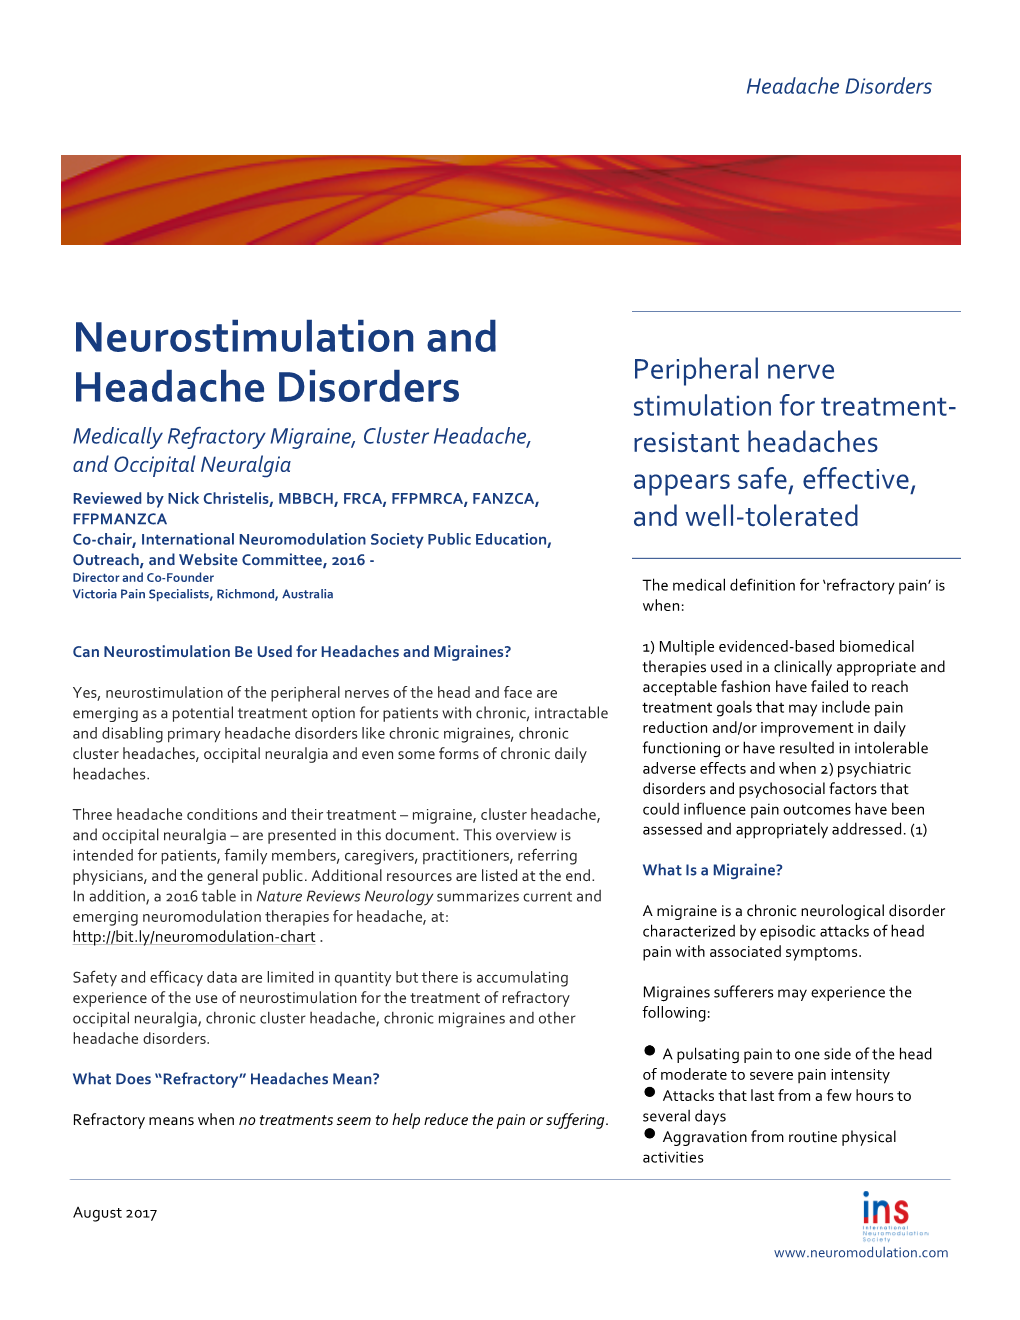 Neurostimulation and Headache Disorders